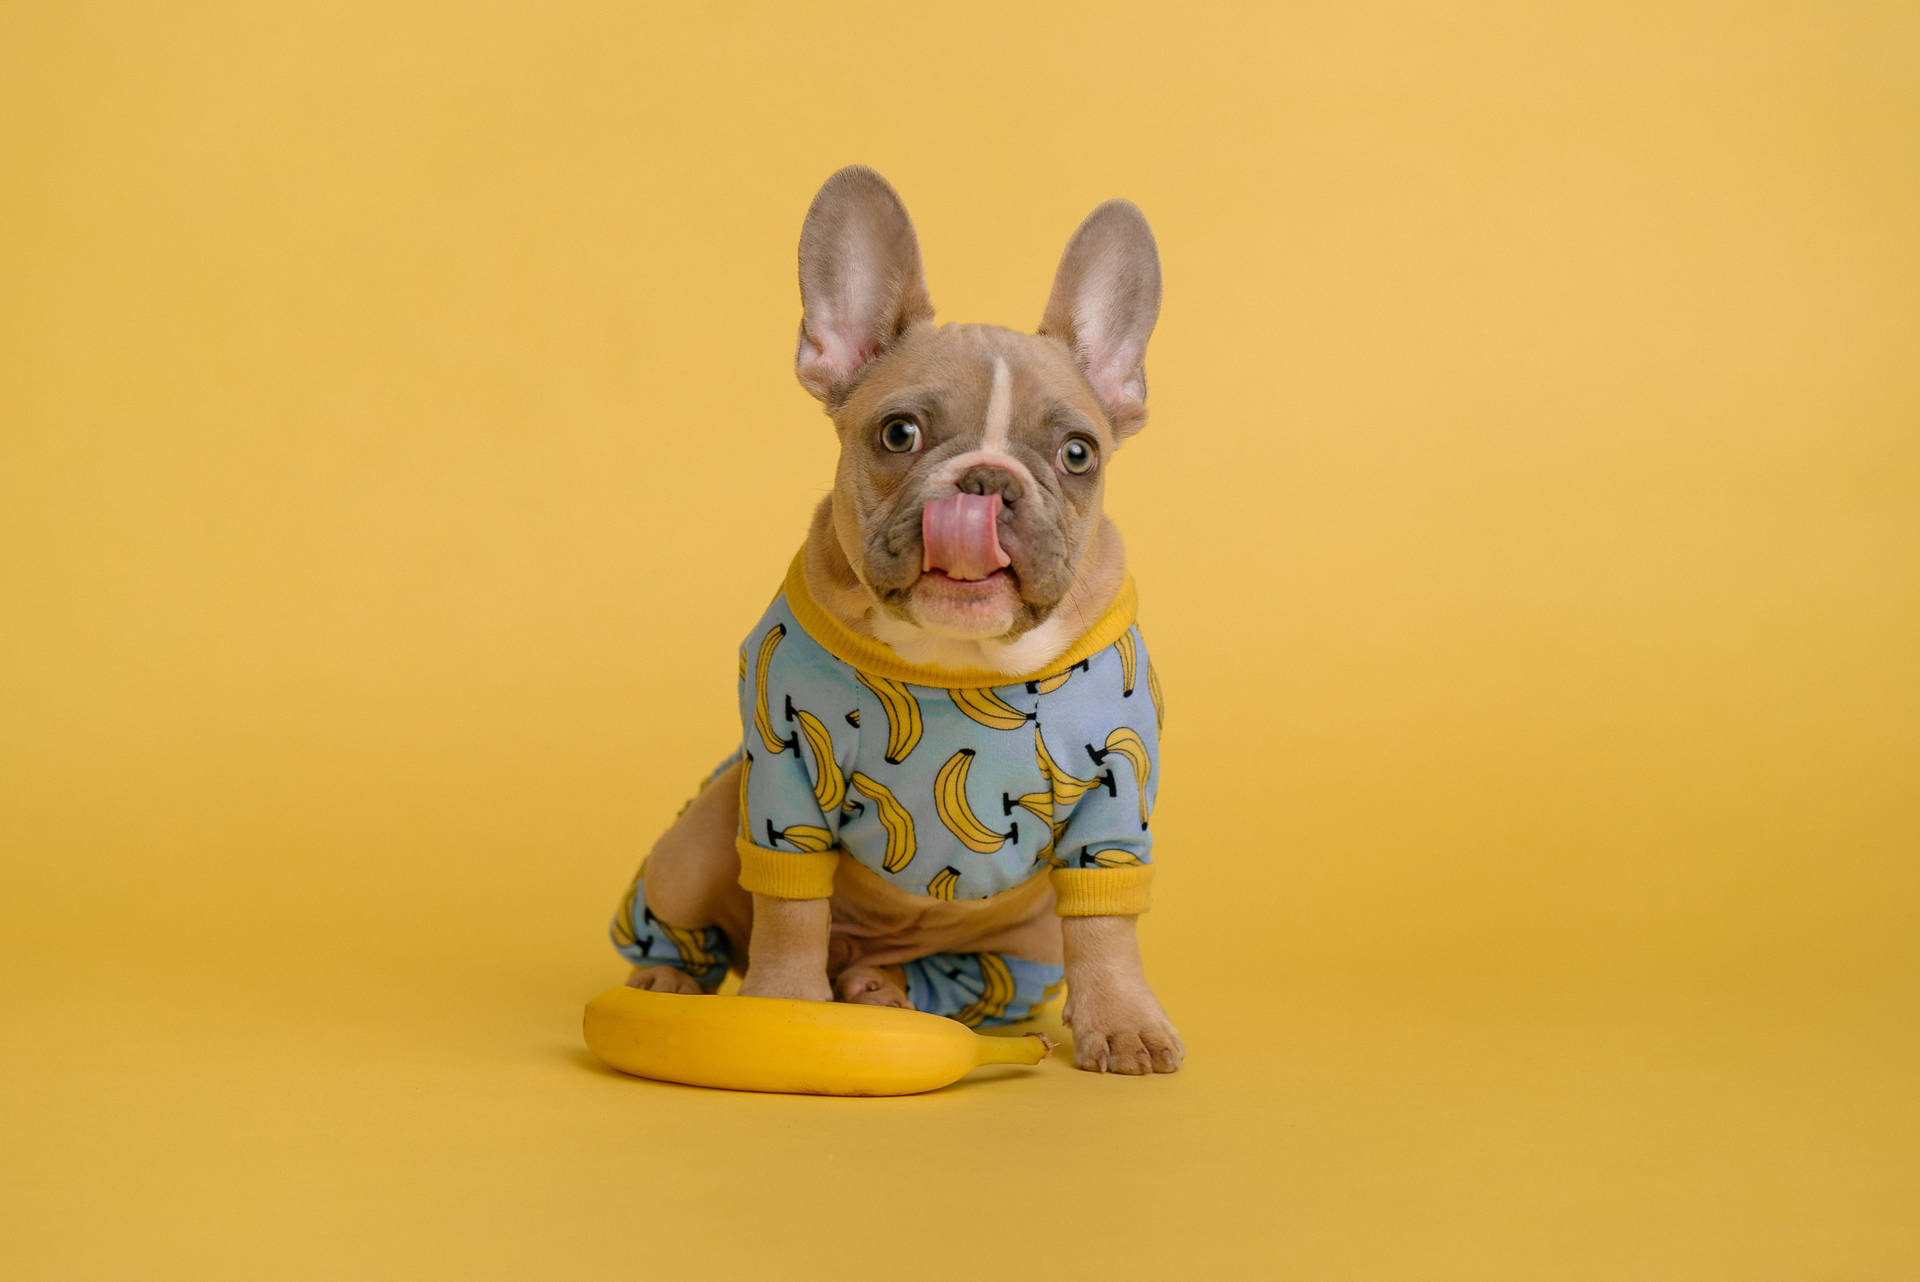 French Bulldog In Banana Outfit